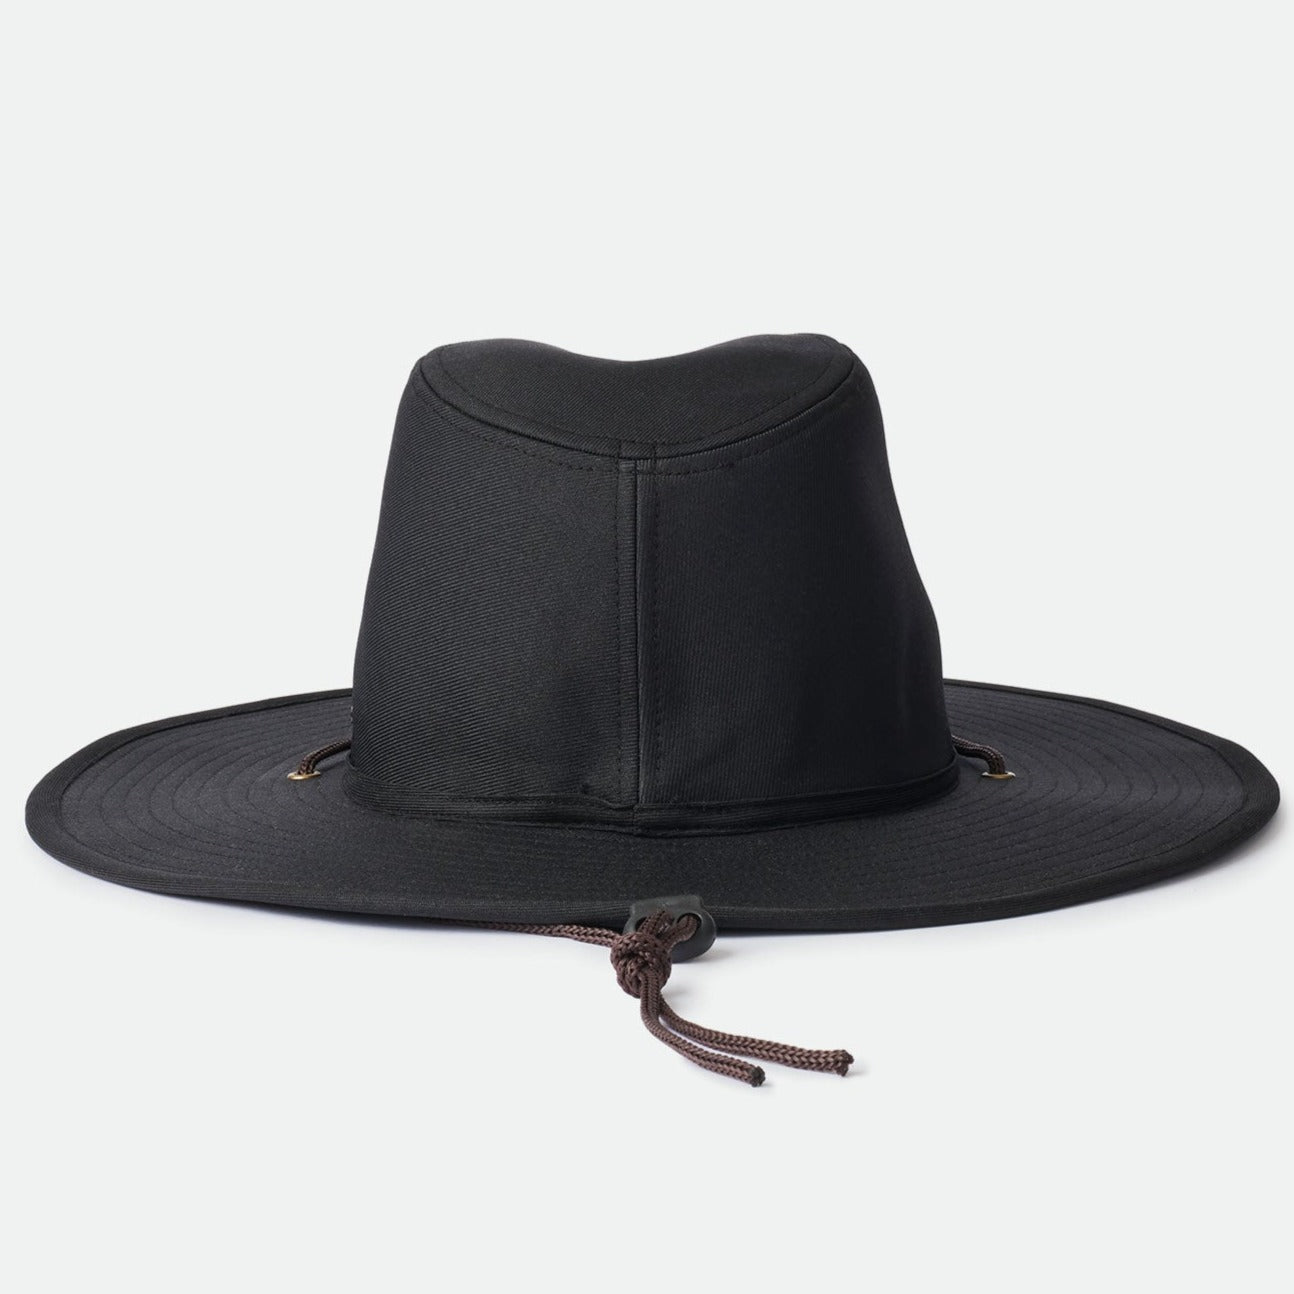 Brixton - Field Crossover Hat - Black